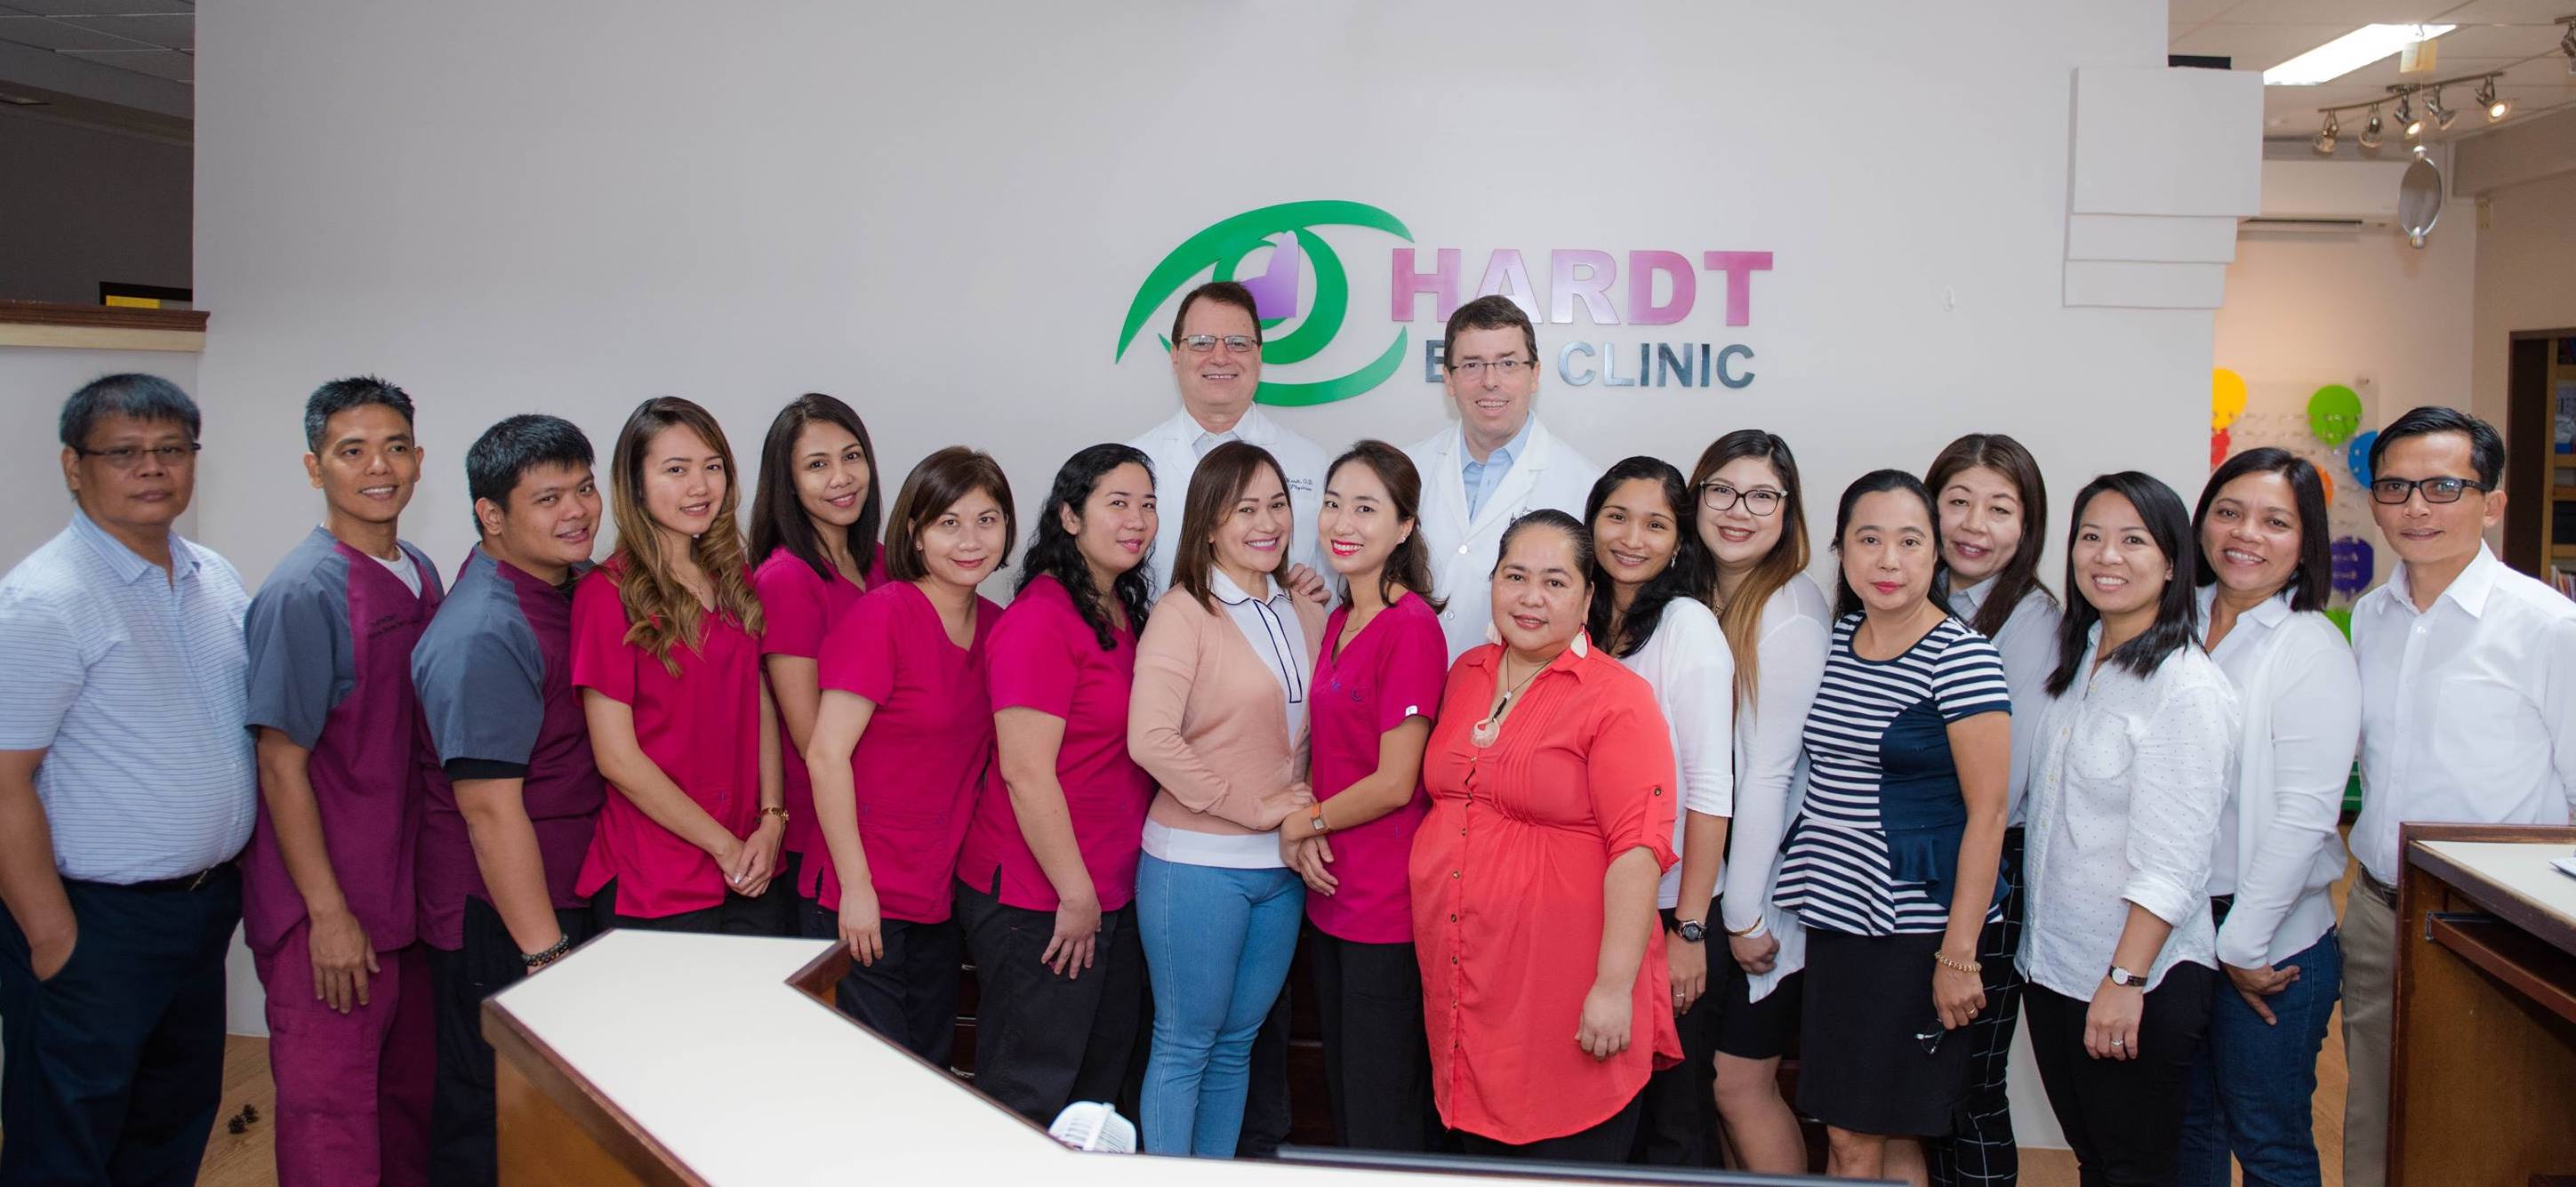 Hardt Eye Clinic & Diabetes Education Center Staff